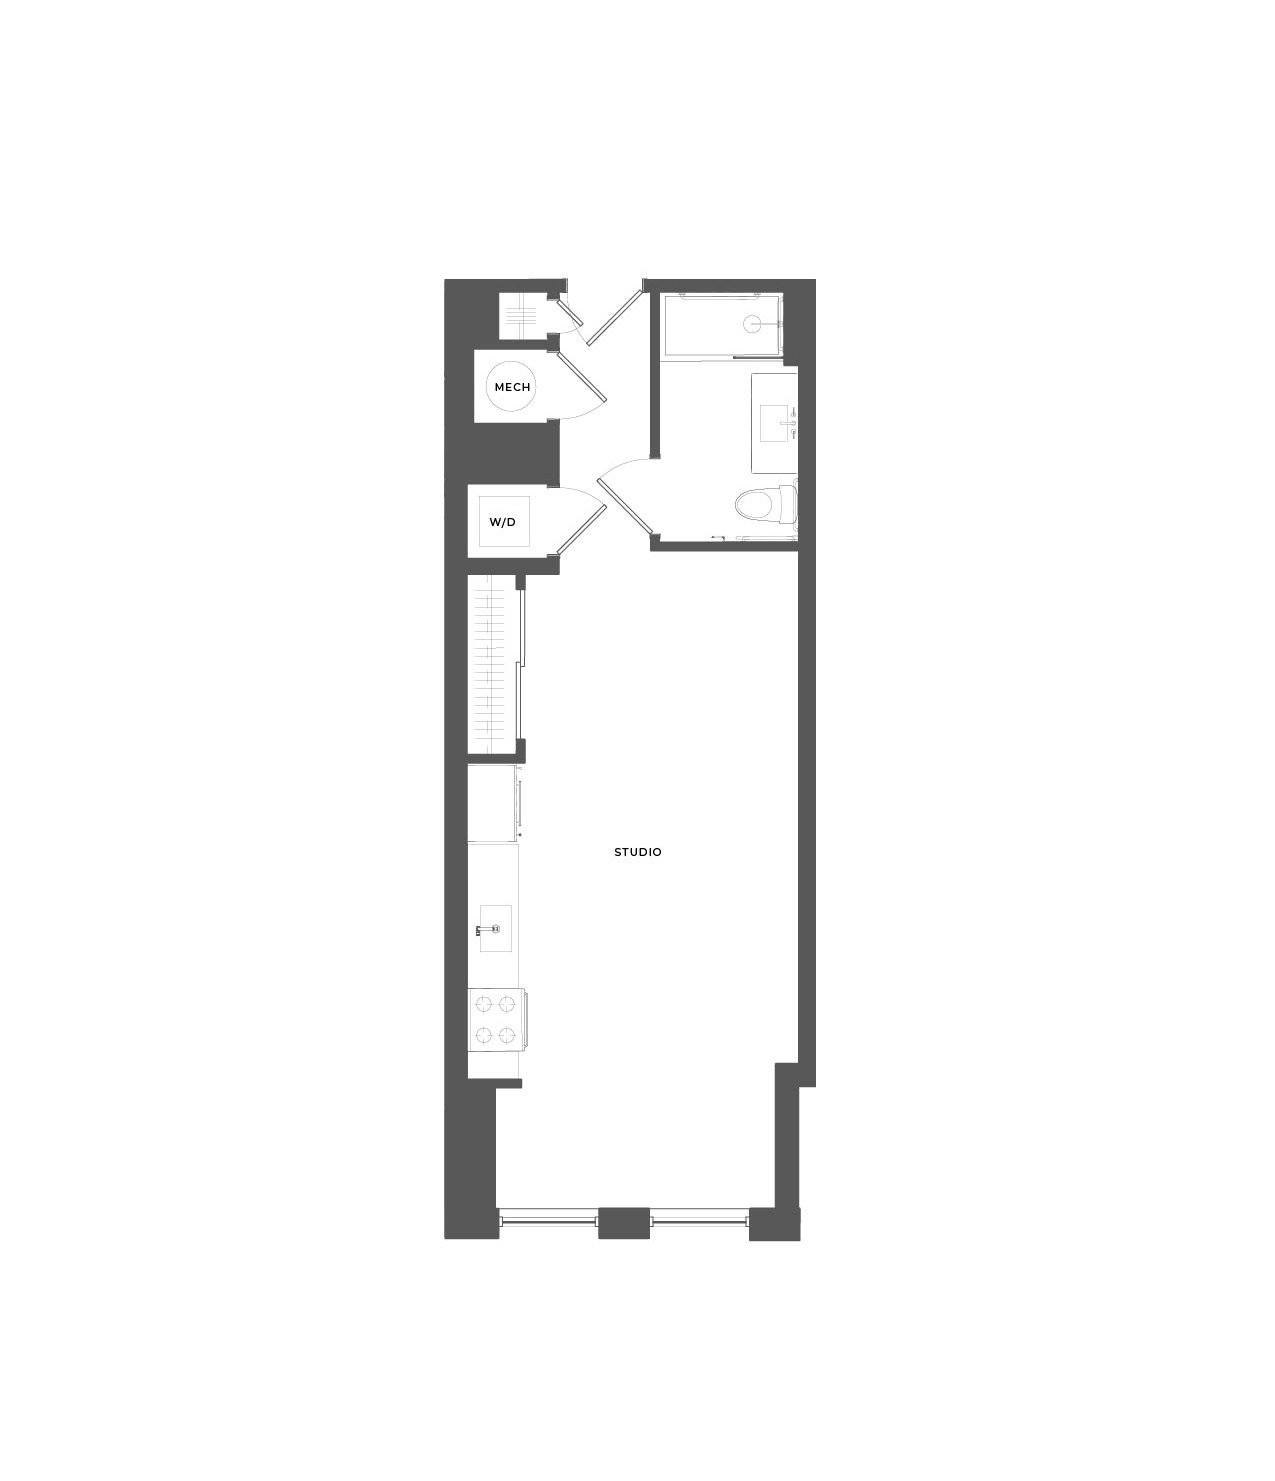 Floorplan of 0805